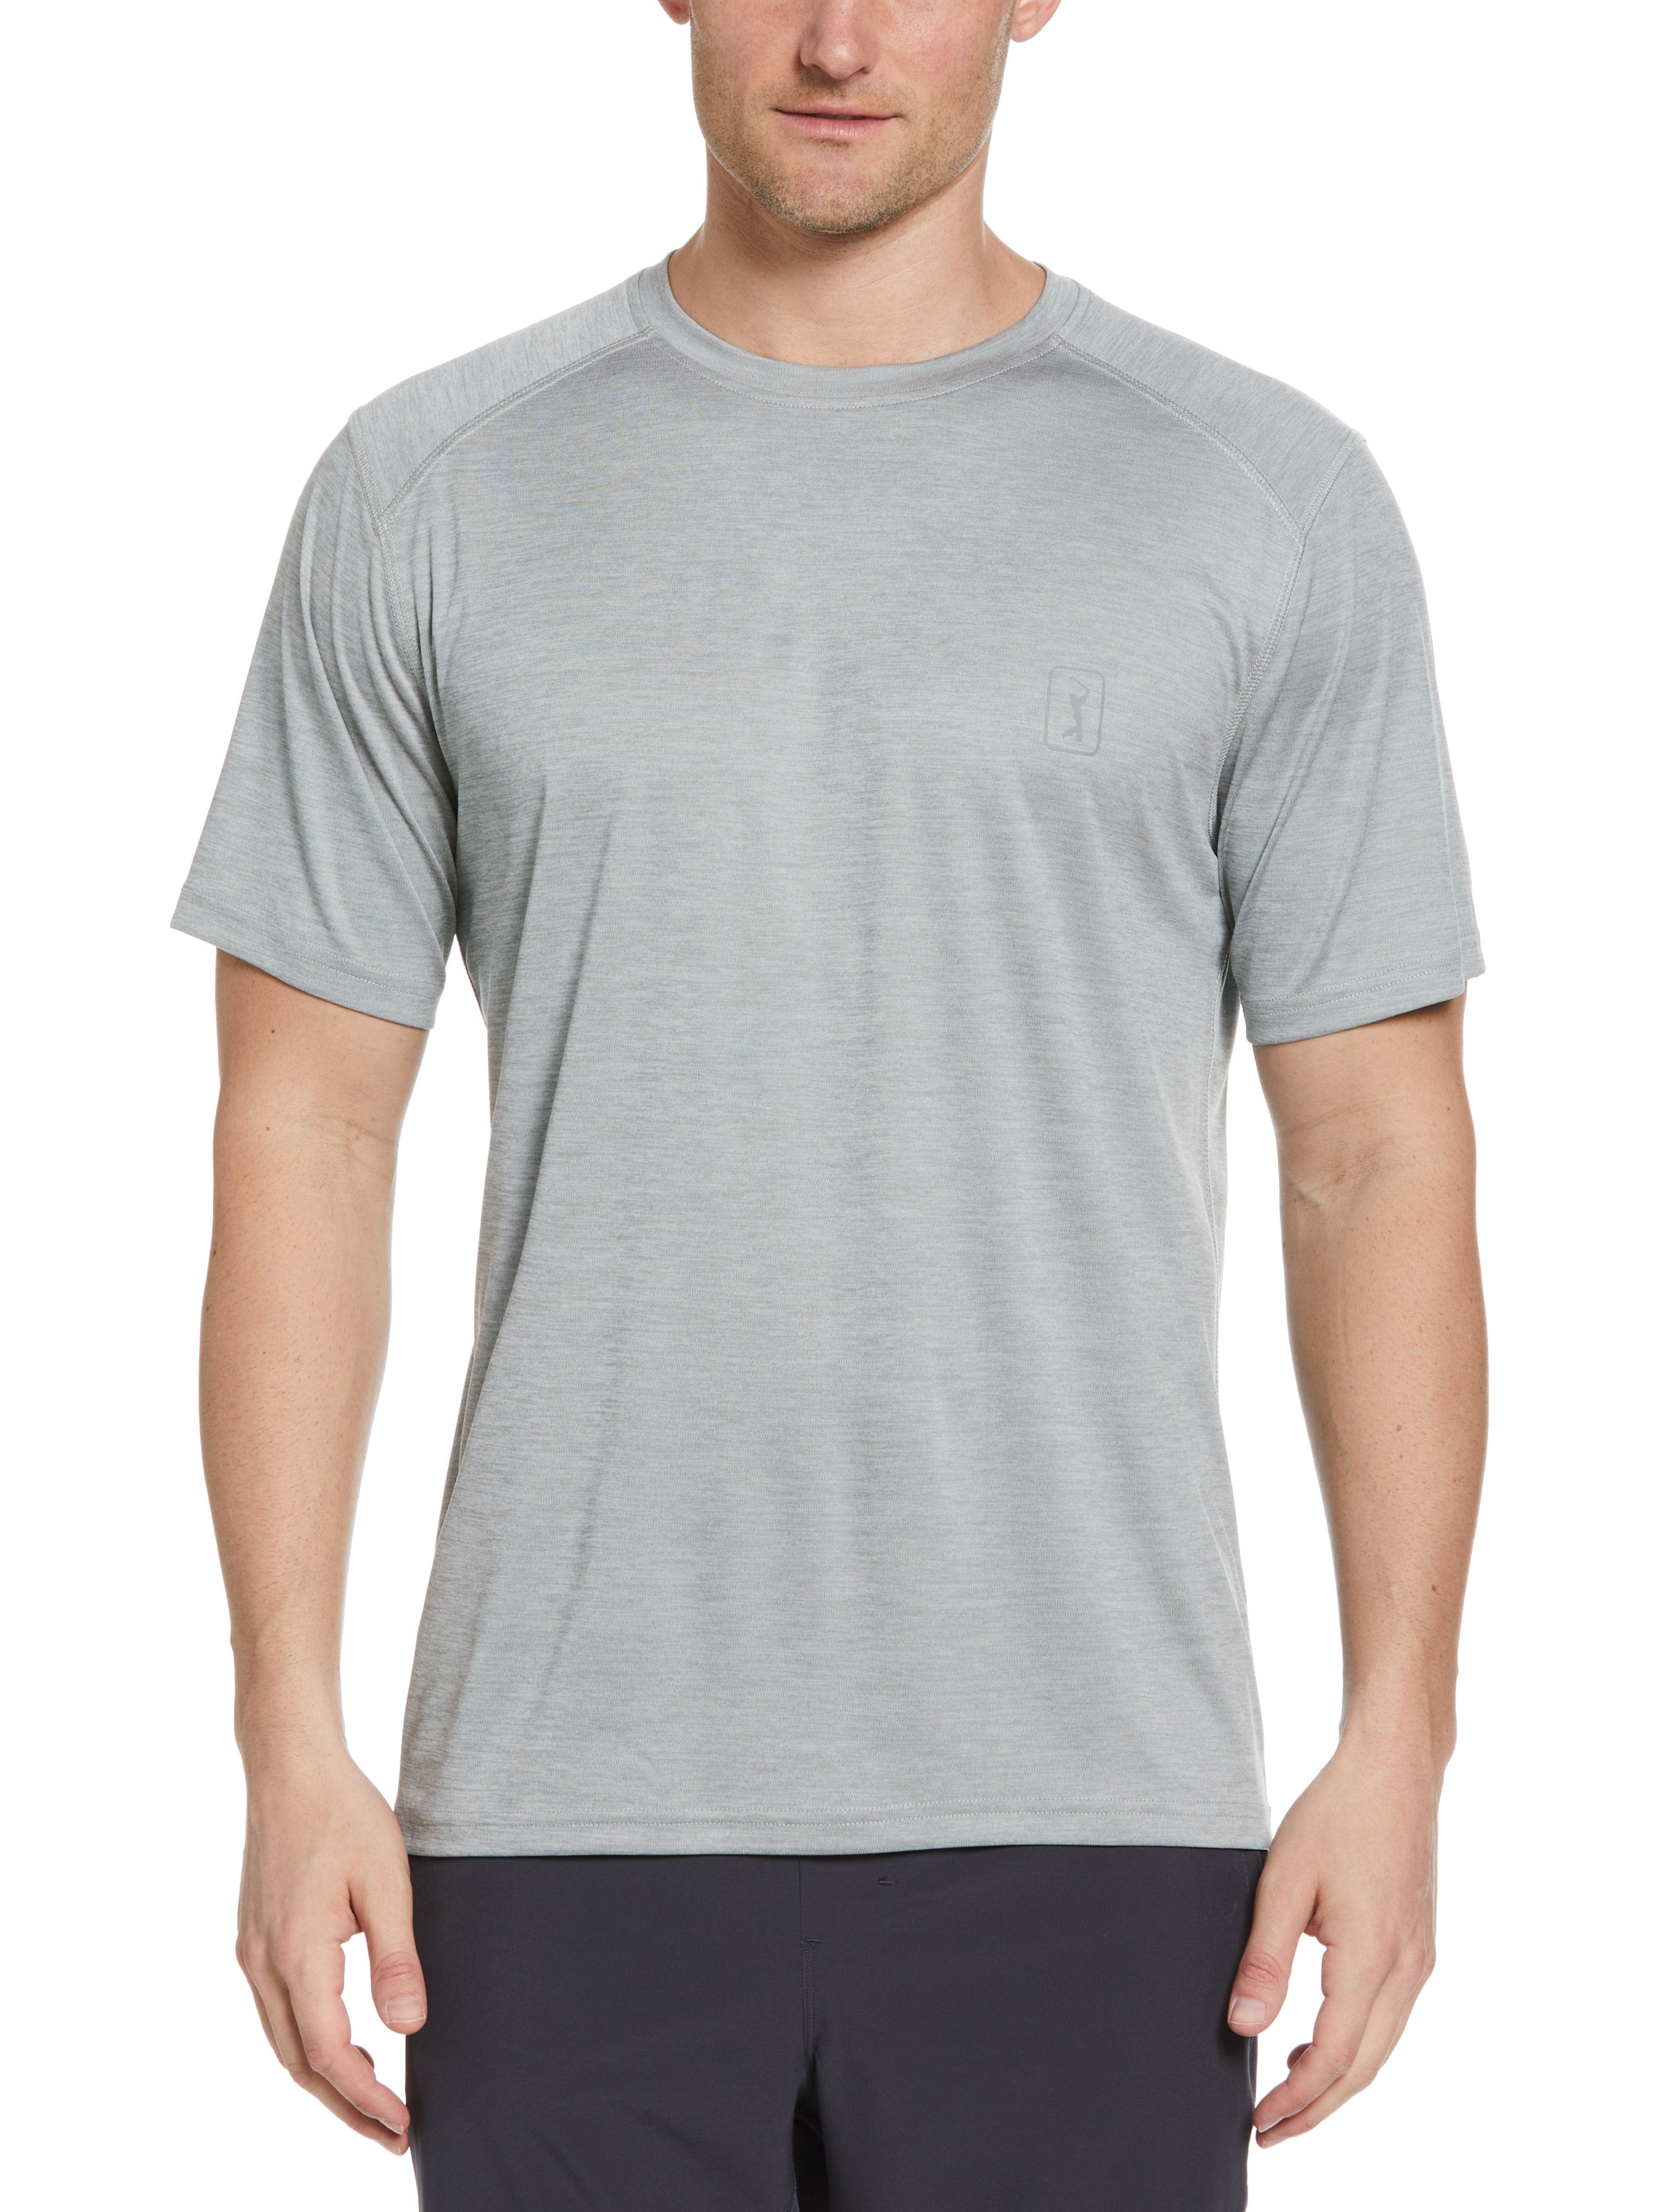 PGA TOUR Apparel Mens Performance Crew Golf T-Shirt, Size Medium, Light Grey Heather Gray, 100% Polyester | Golf Apparel Shop